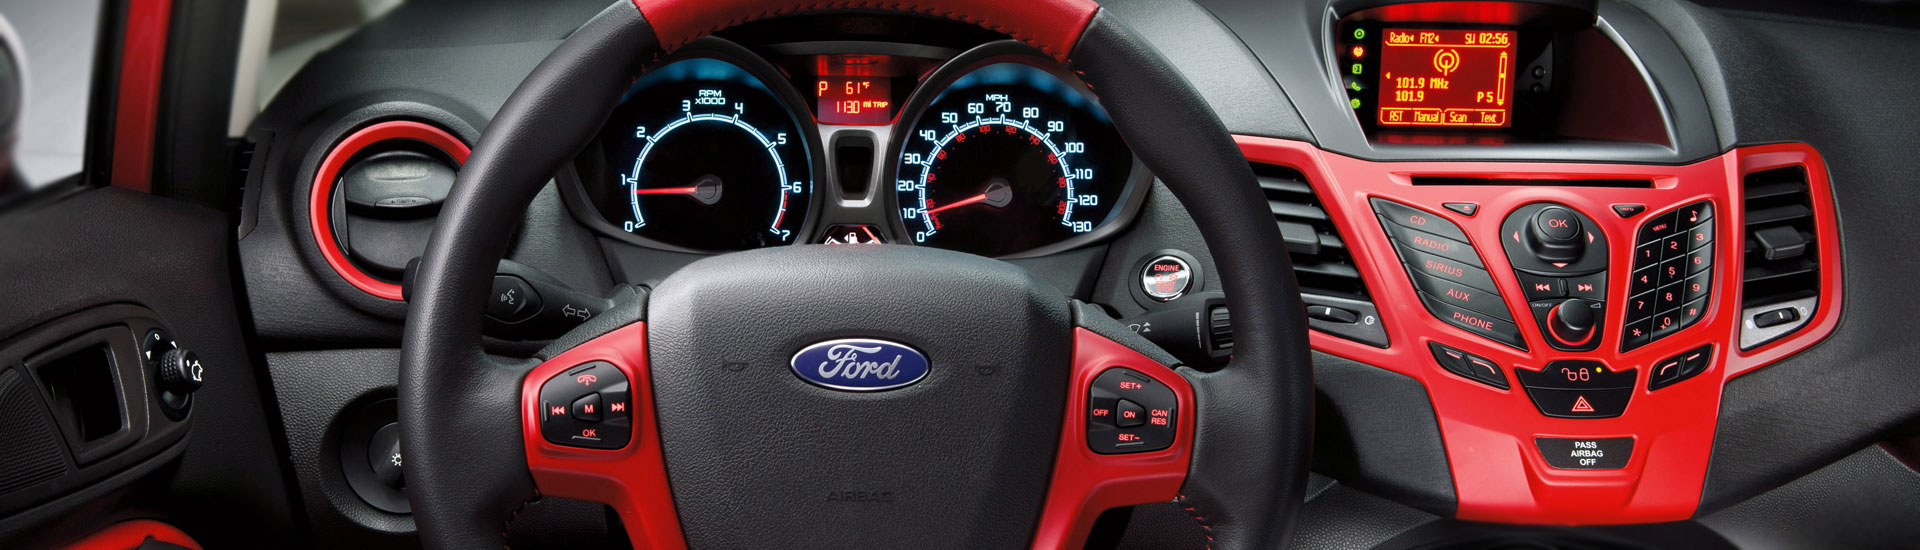 2014 Ford Focus Custom Dash Kits